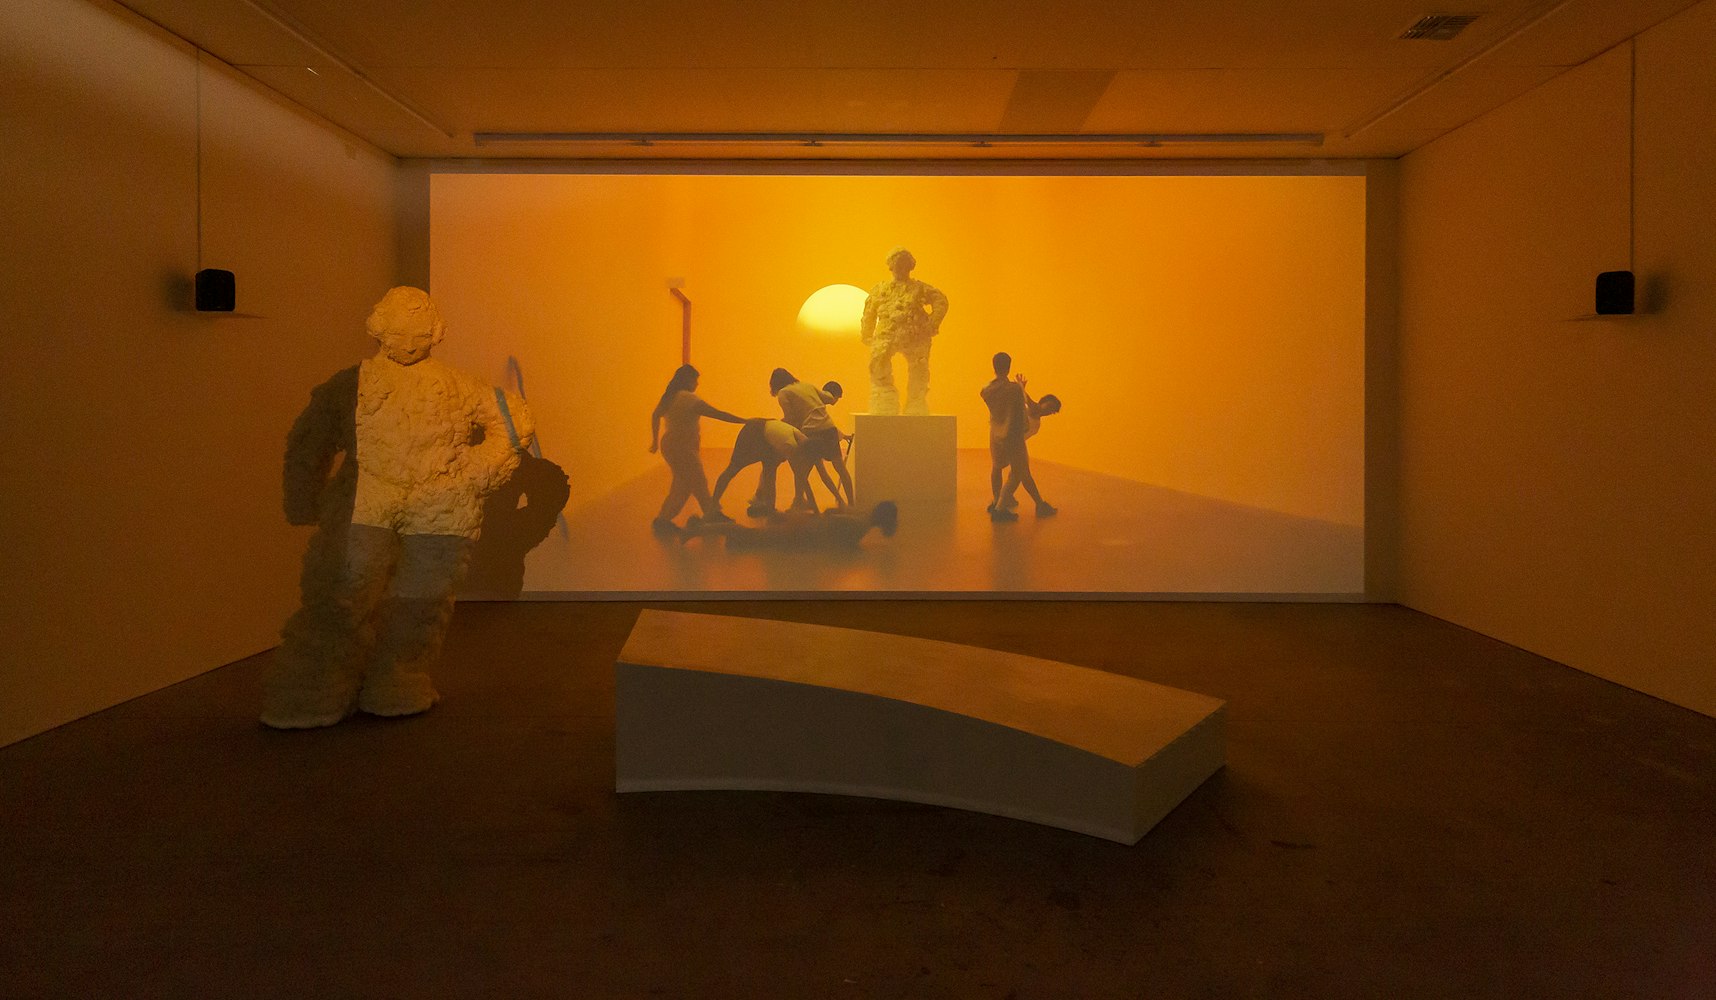 Amrita Hepi, Monumental, 2021, installation view at Gertrude Contemporary. Photo: Christian Capurro